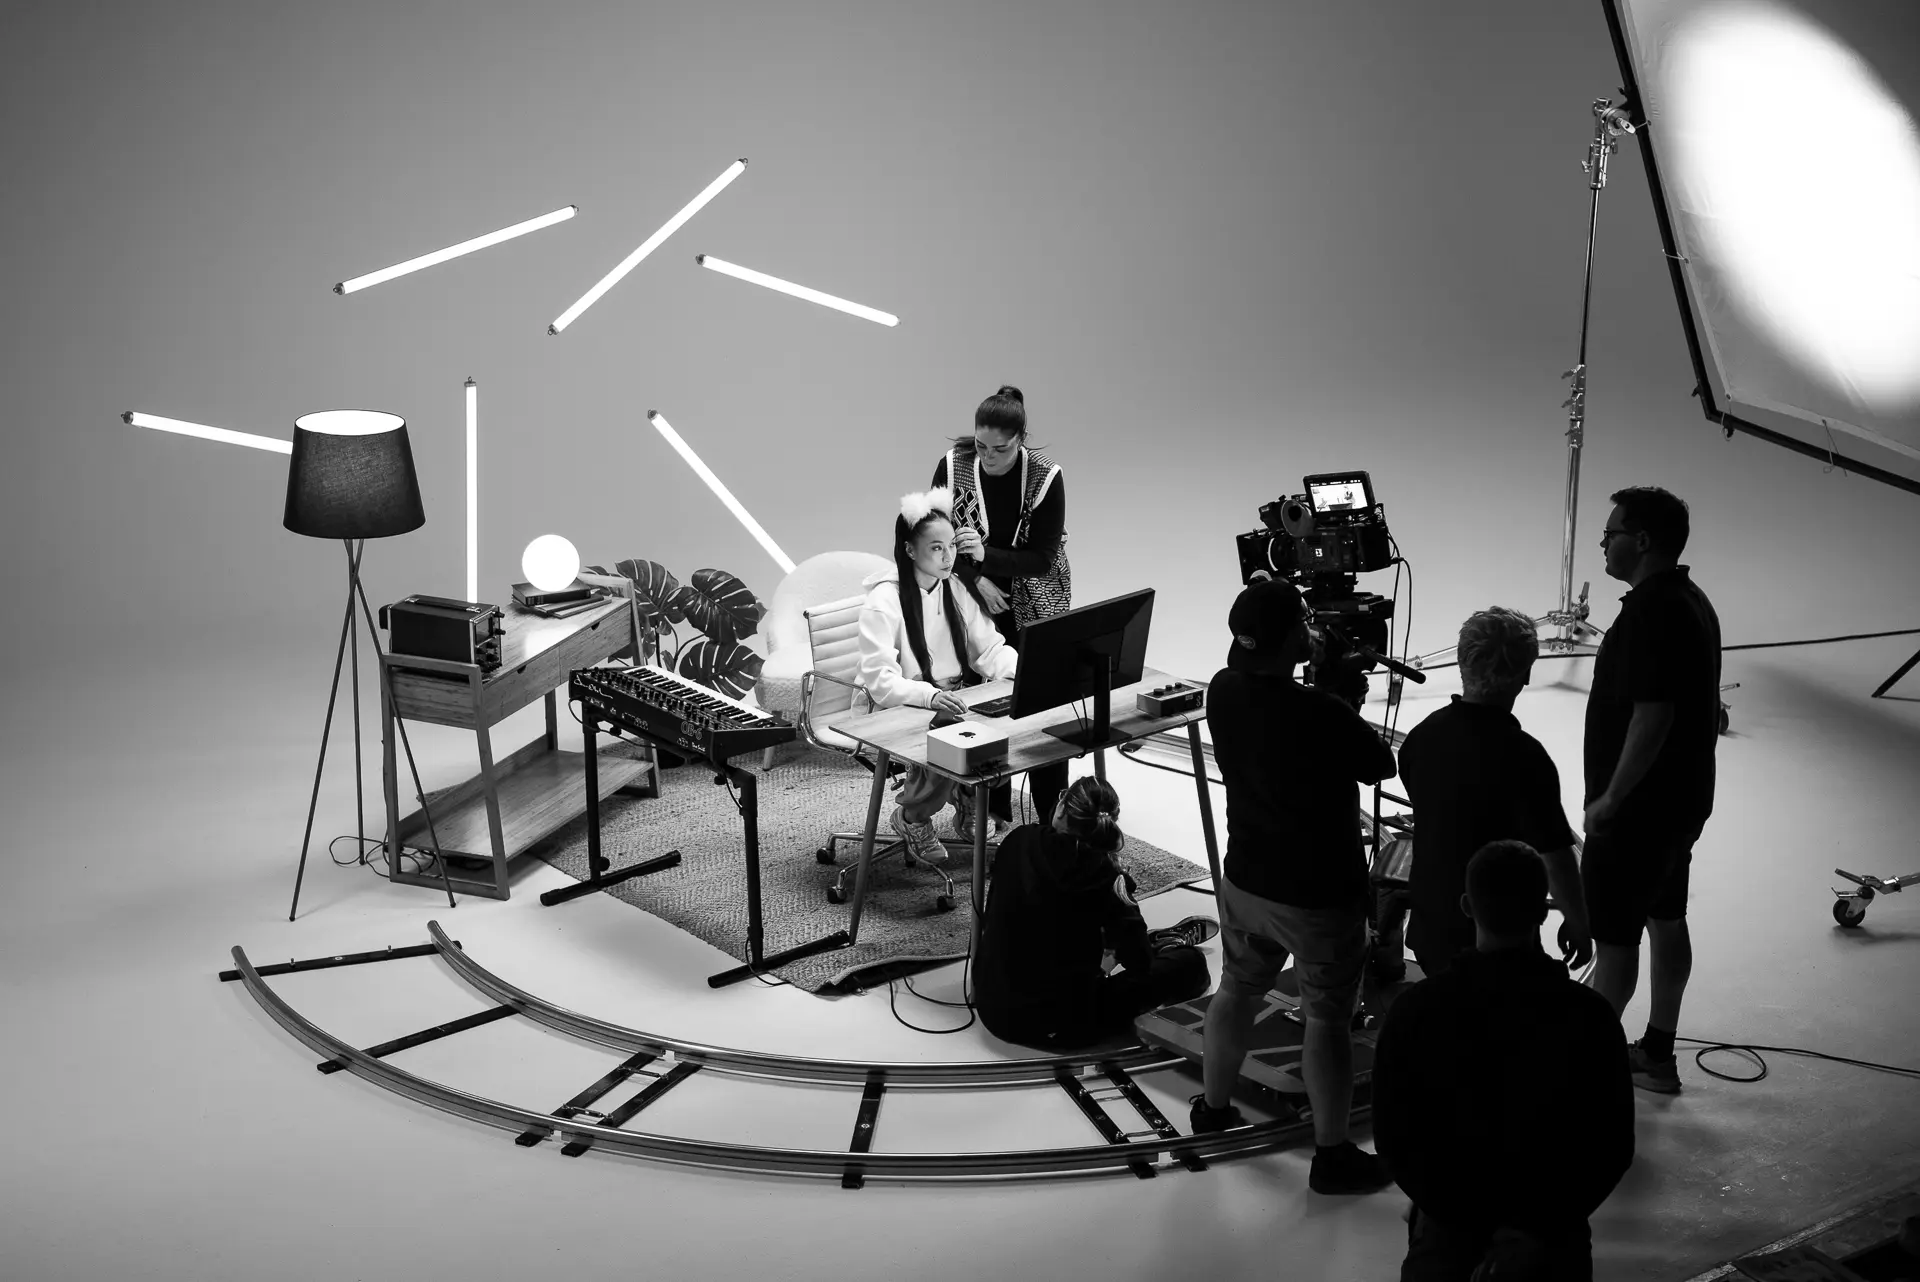 Mock-up music producer studio, designed and shot by KINØ.